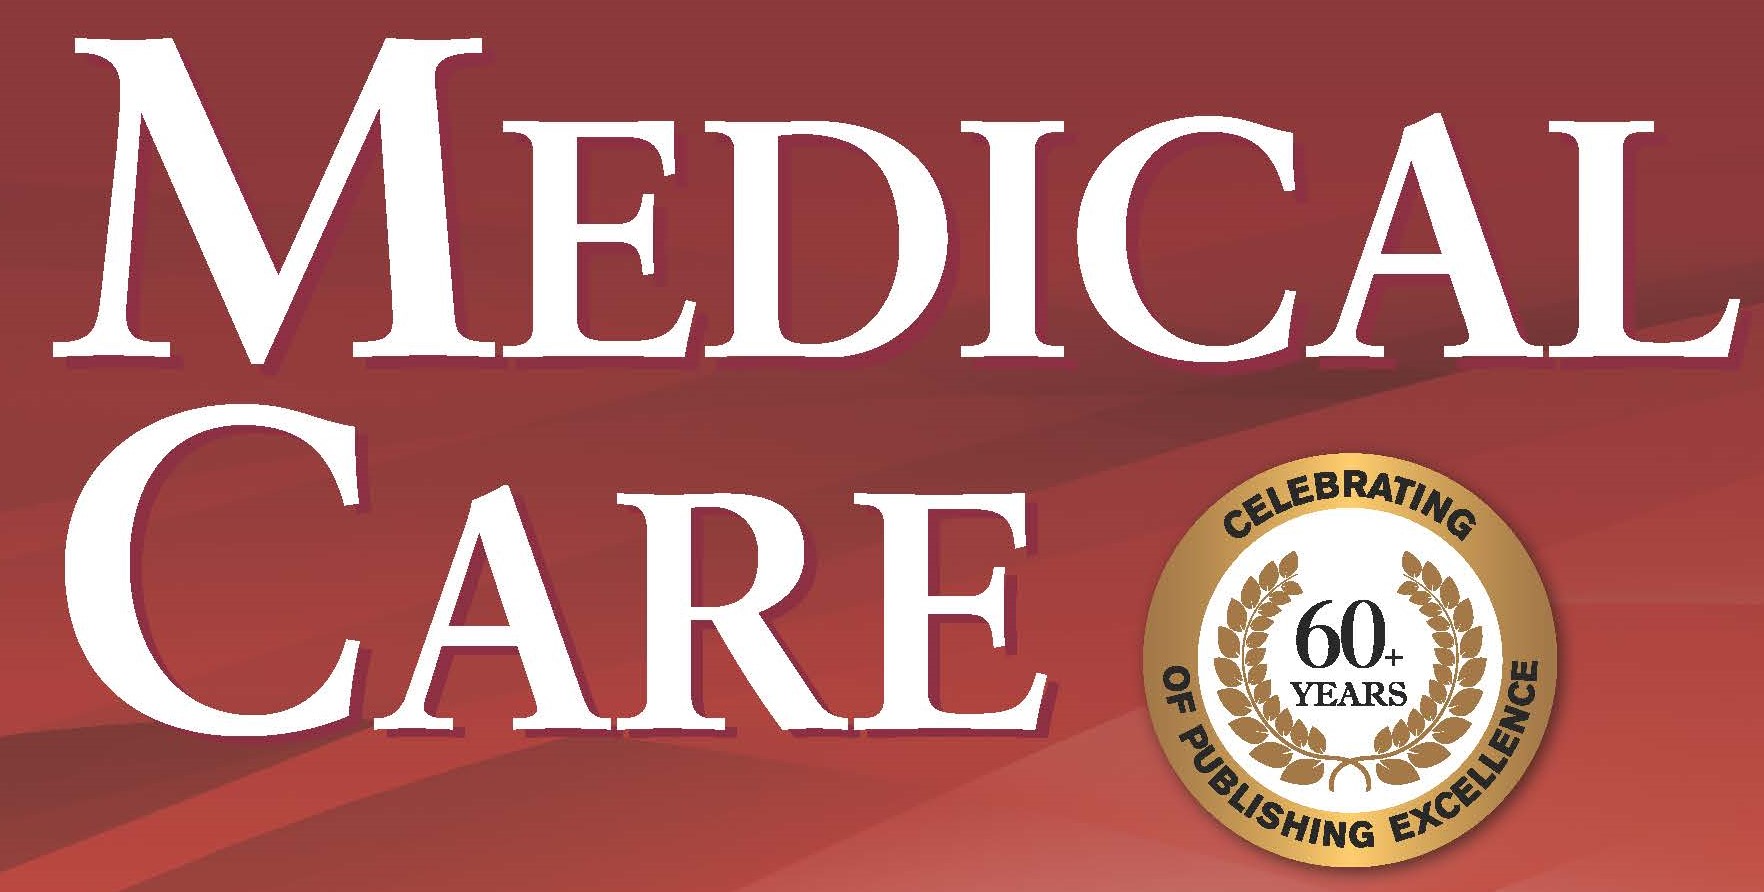 Medical_care